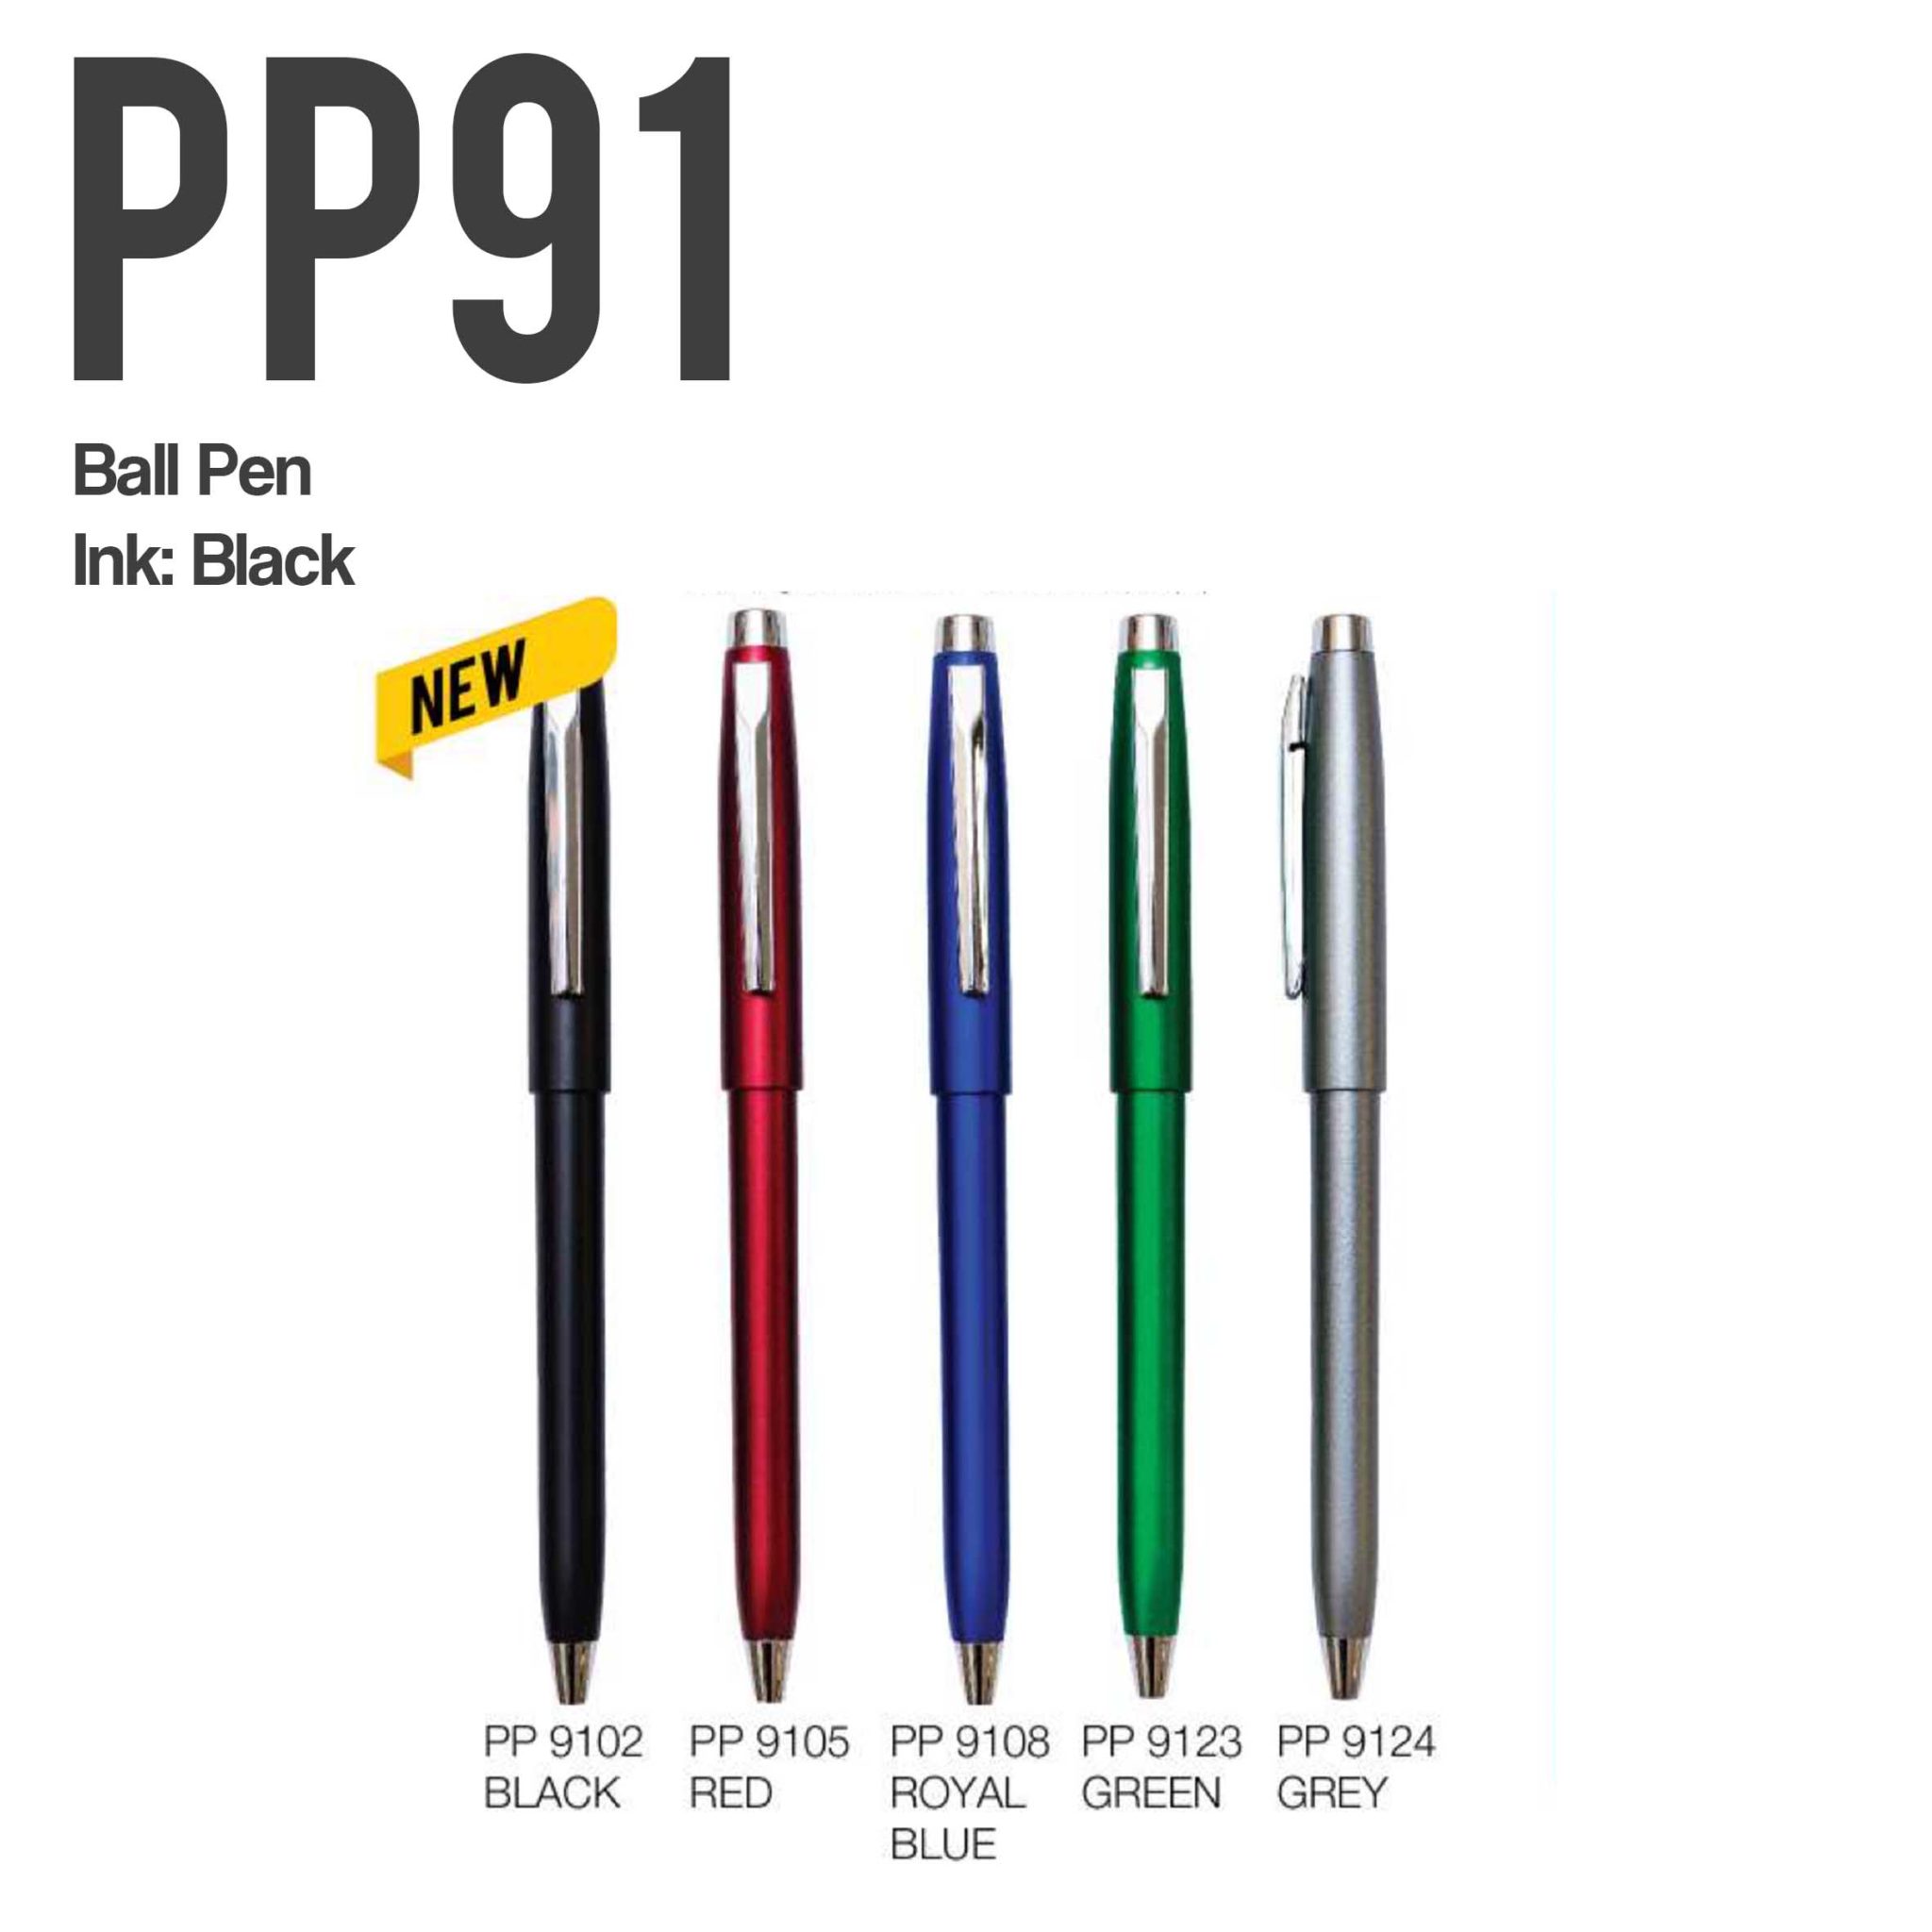 PP91 plastic pen scaled